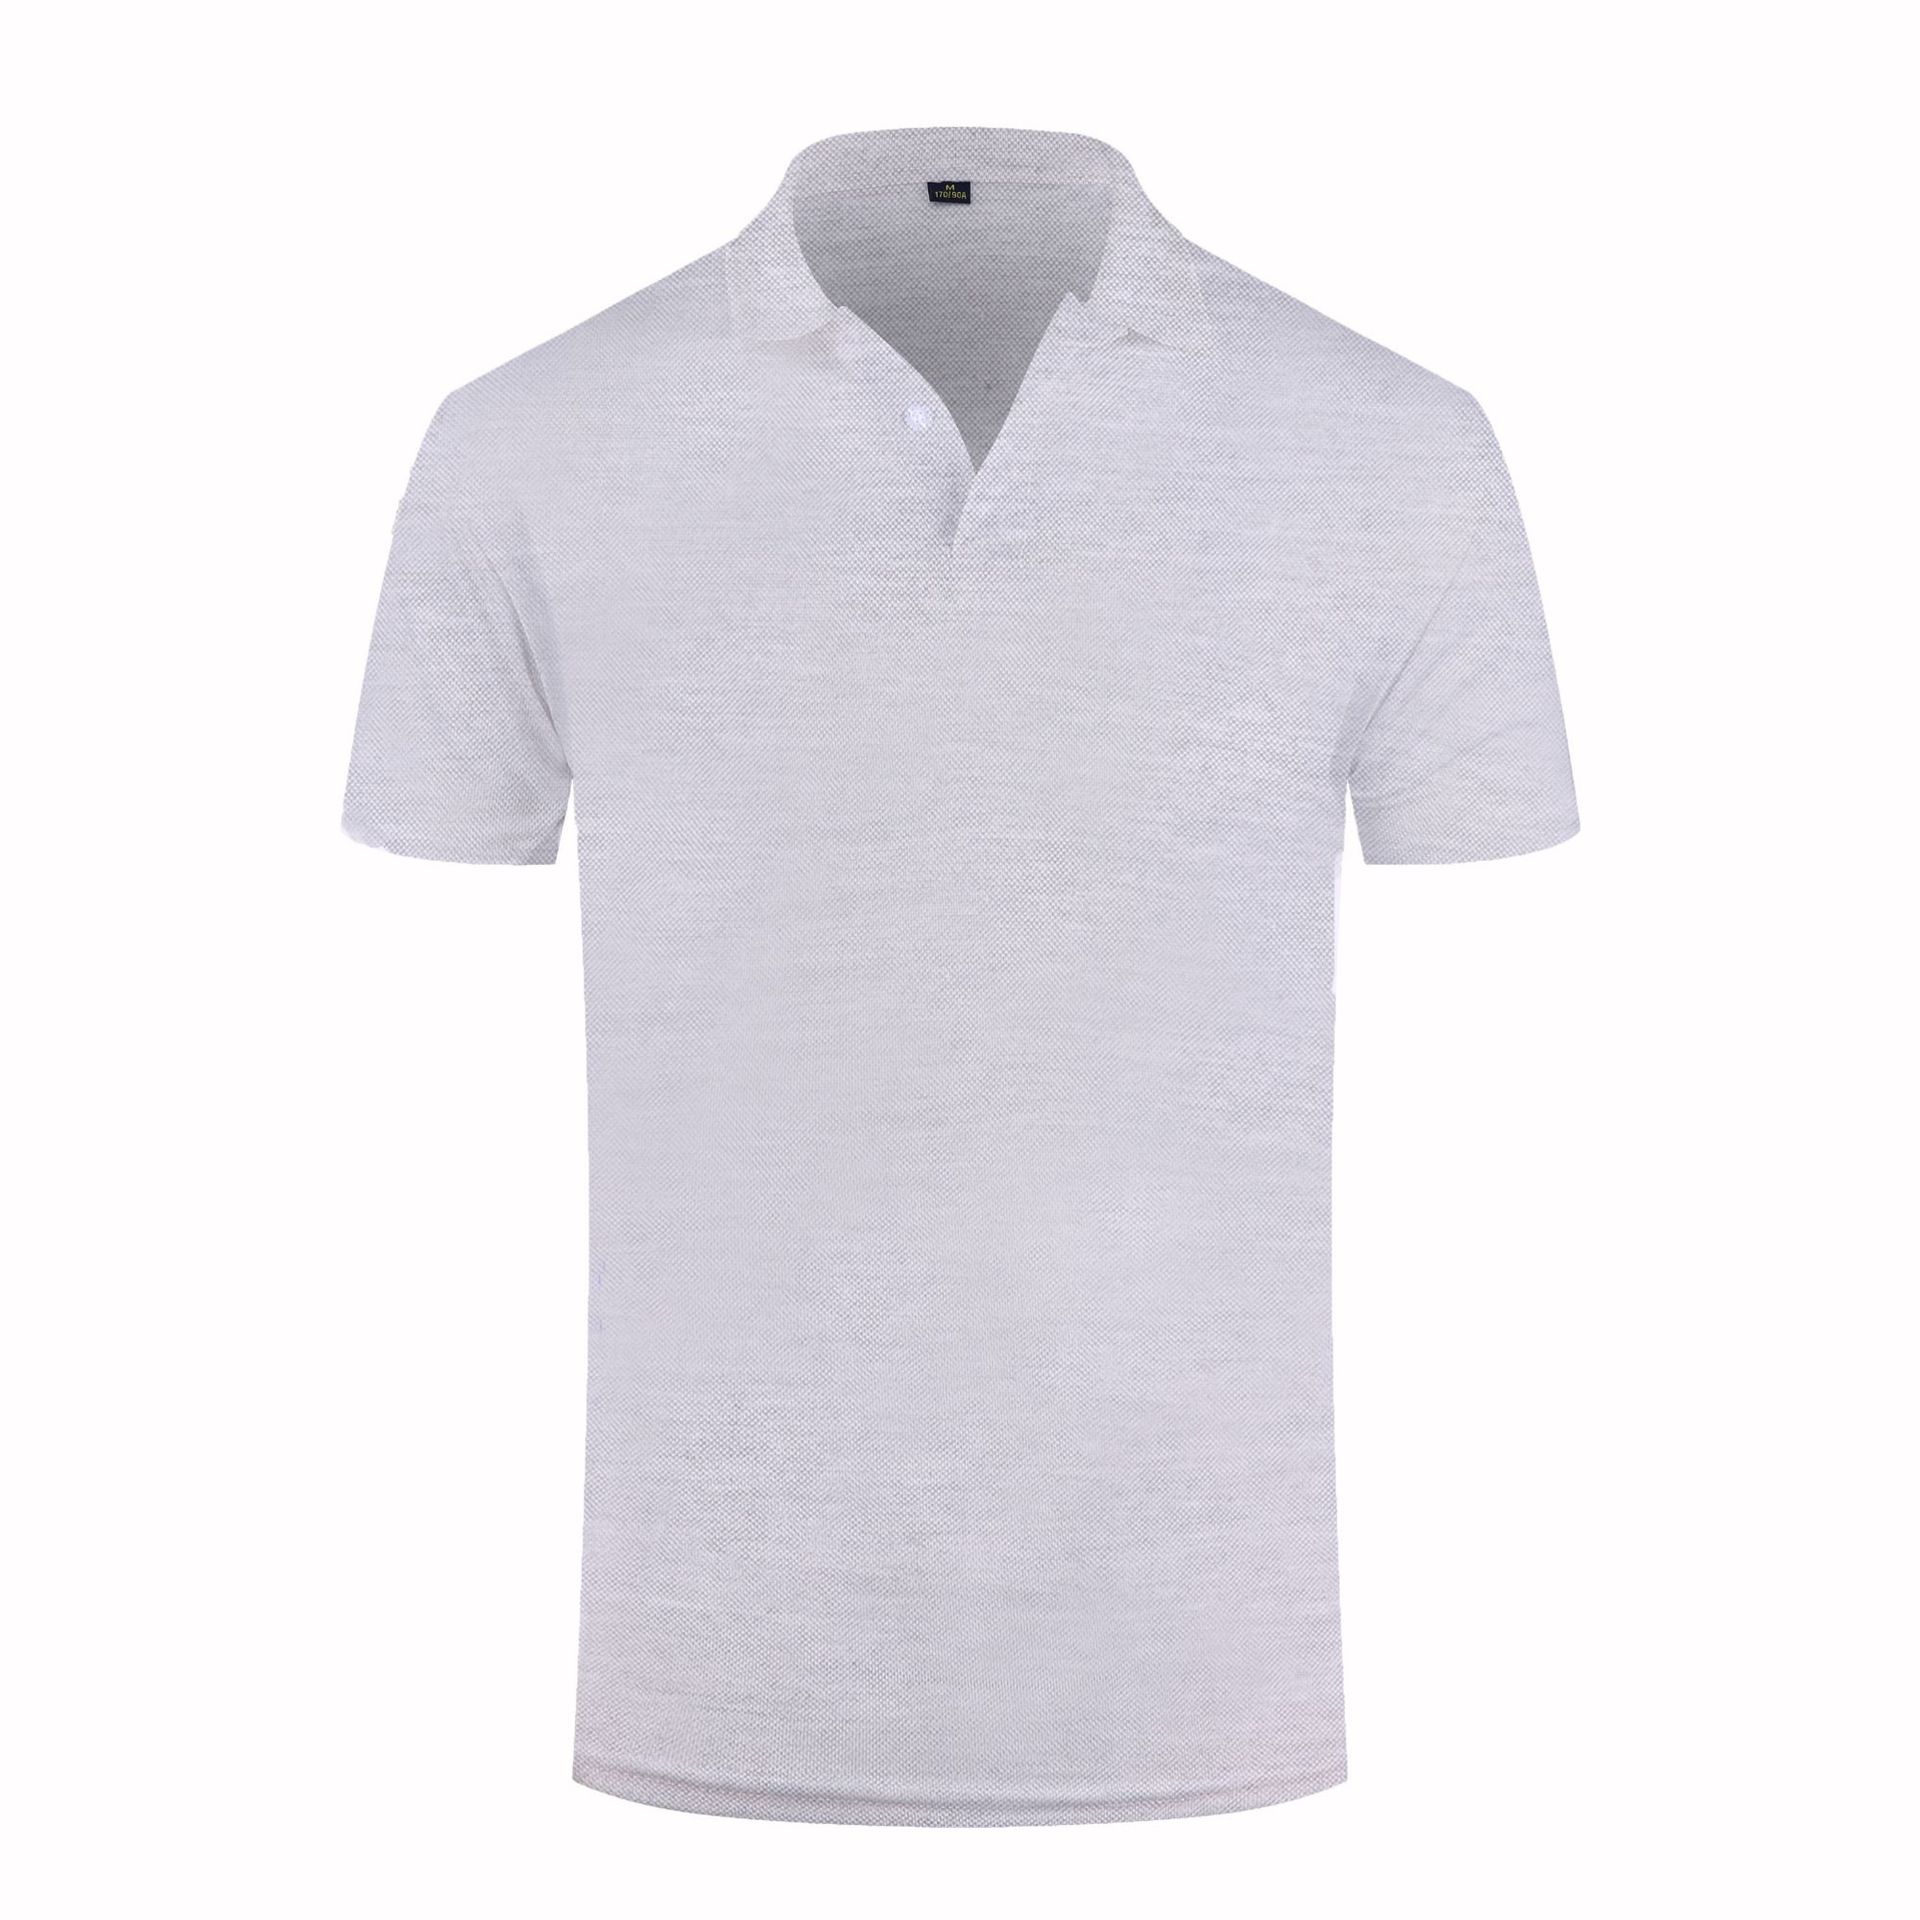 Sports Quick-Drying T-shirt Develop Logo Printing Culture Advertising Shirt Marathon Breathable Running Lapel Short Sleeve Polo Shirt